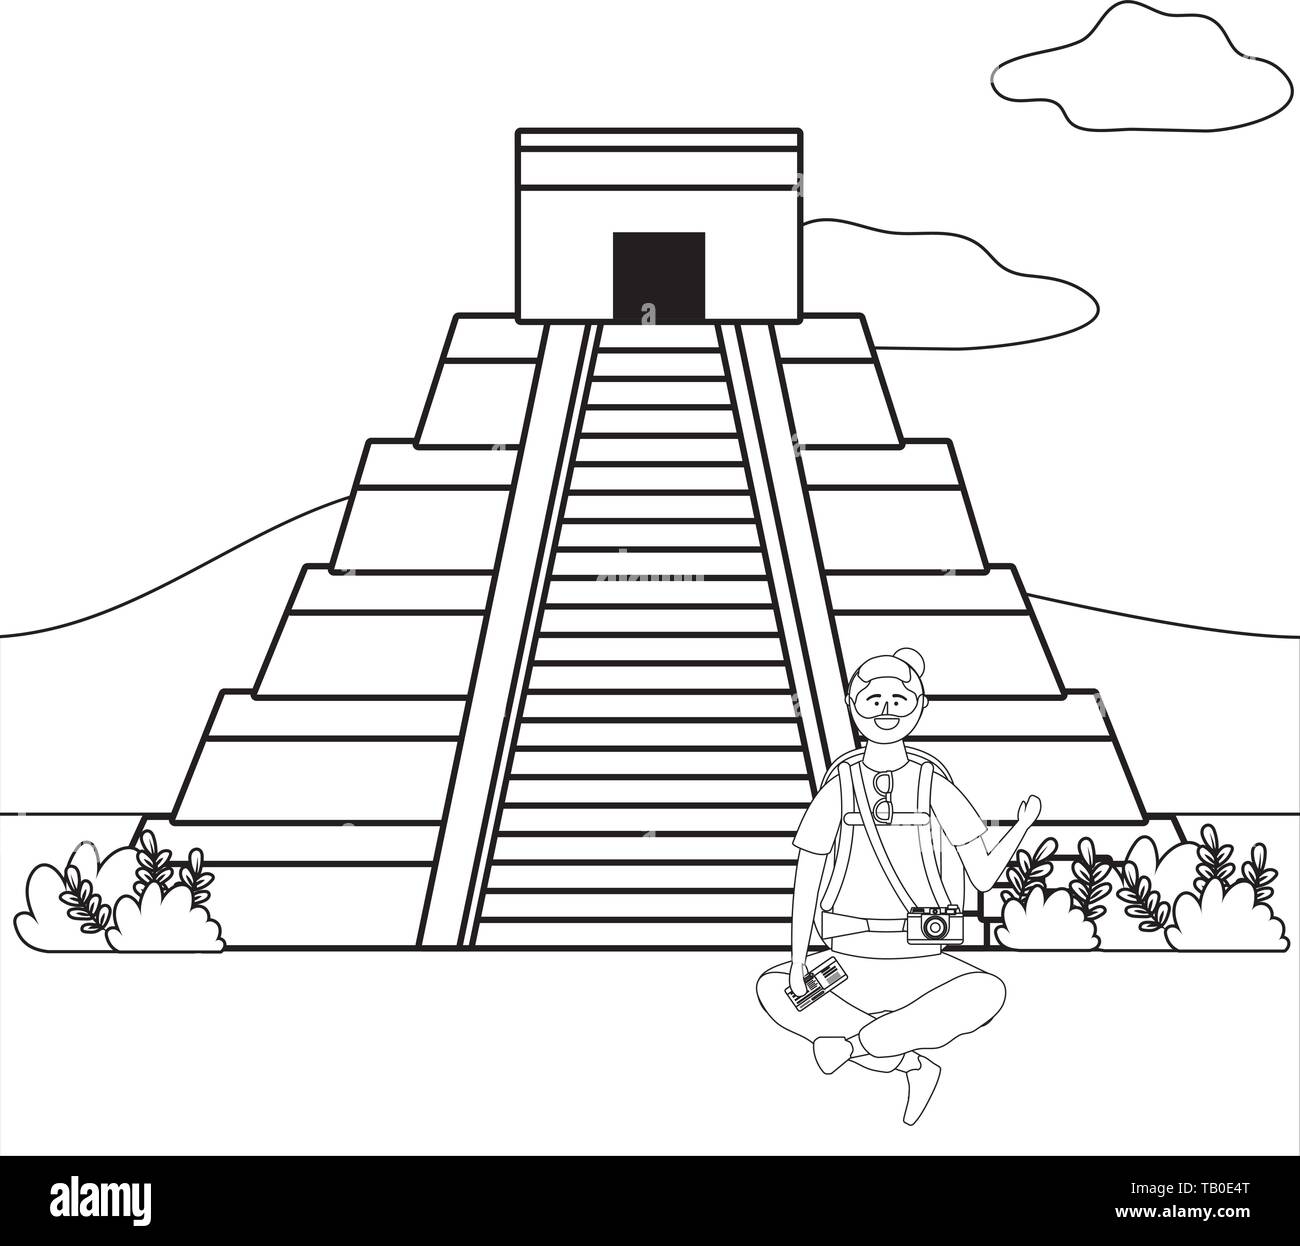 Kukulkan Pyramide landmark Design, Reise Reise Urlaub Tourismus und Reise Thema Vector Illustration Stock Vektor